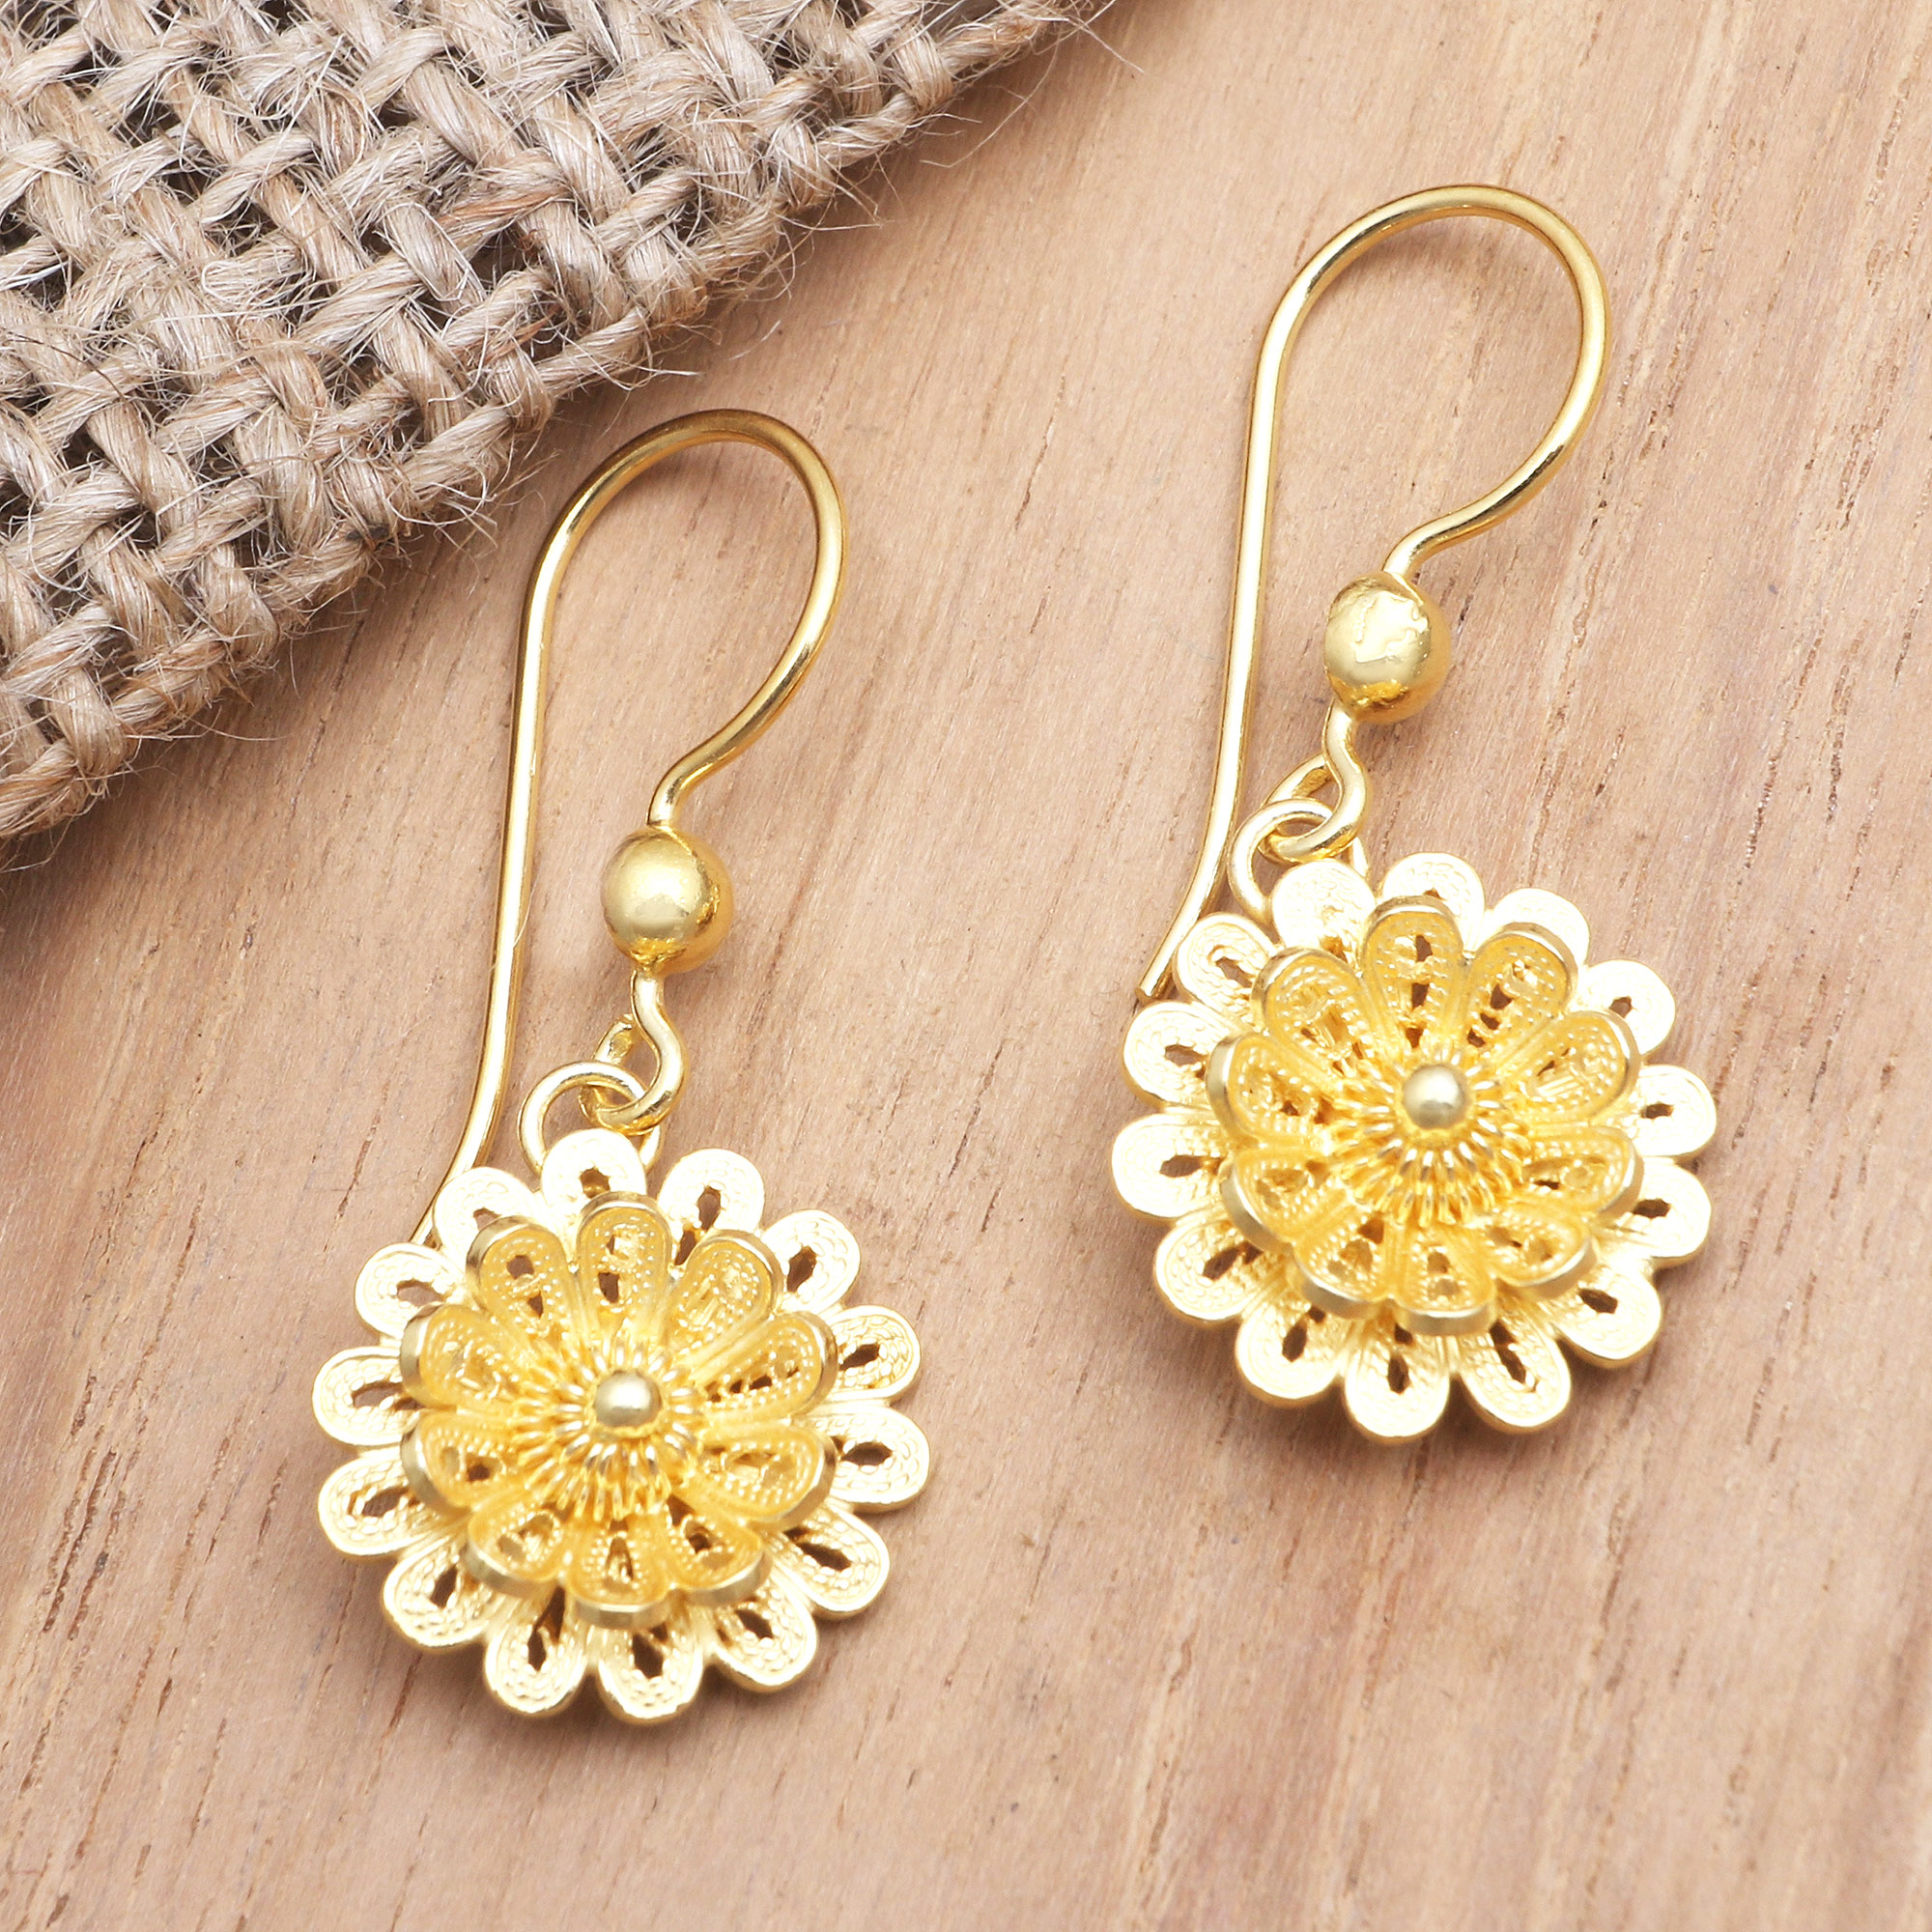 Bangrui Africa Earrings For Women / Girl, Gold Color Dubai Earrings Arab  Middle Eastern Jewelry Mom Gifts - Stud Earrings - AliExpress